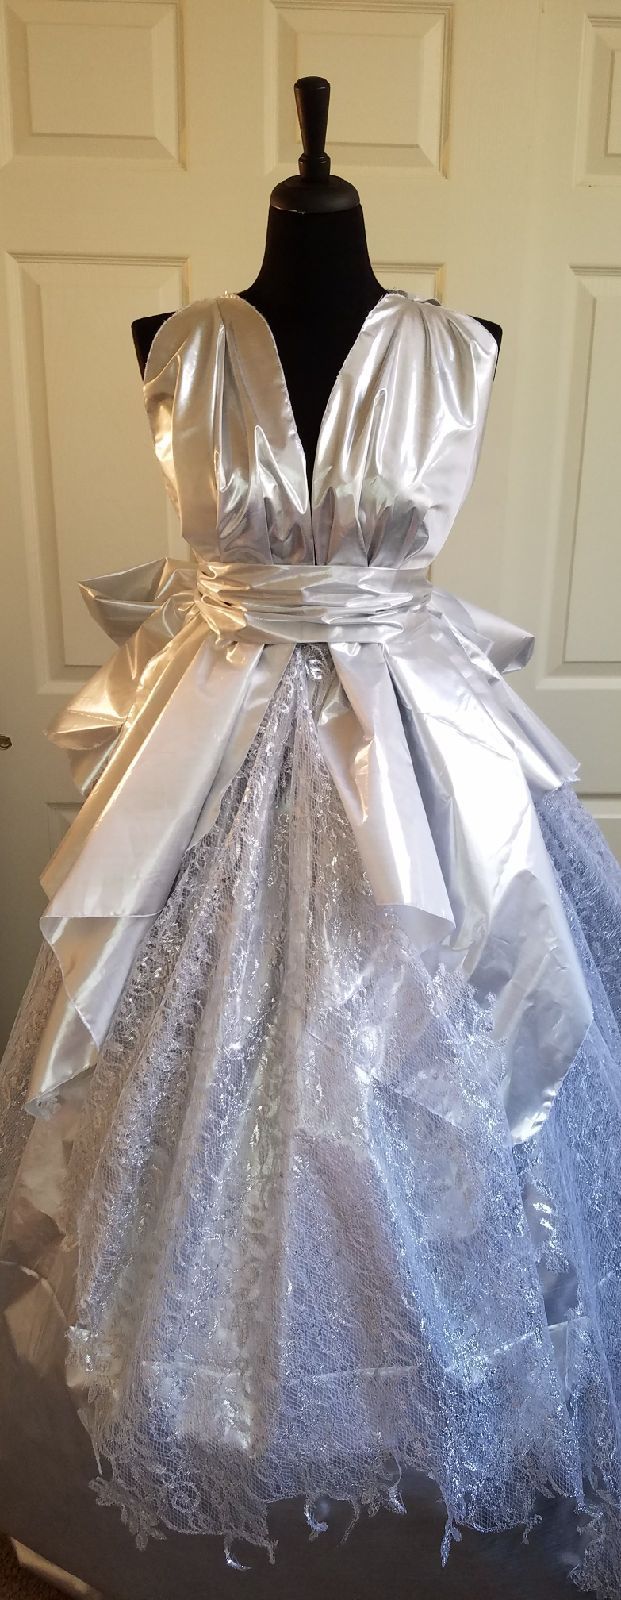 TAJI Romantic Ice Goddess Silver Lame' Metallic Lace Wedding Bridal Ballgown